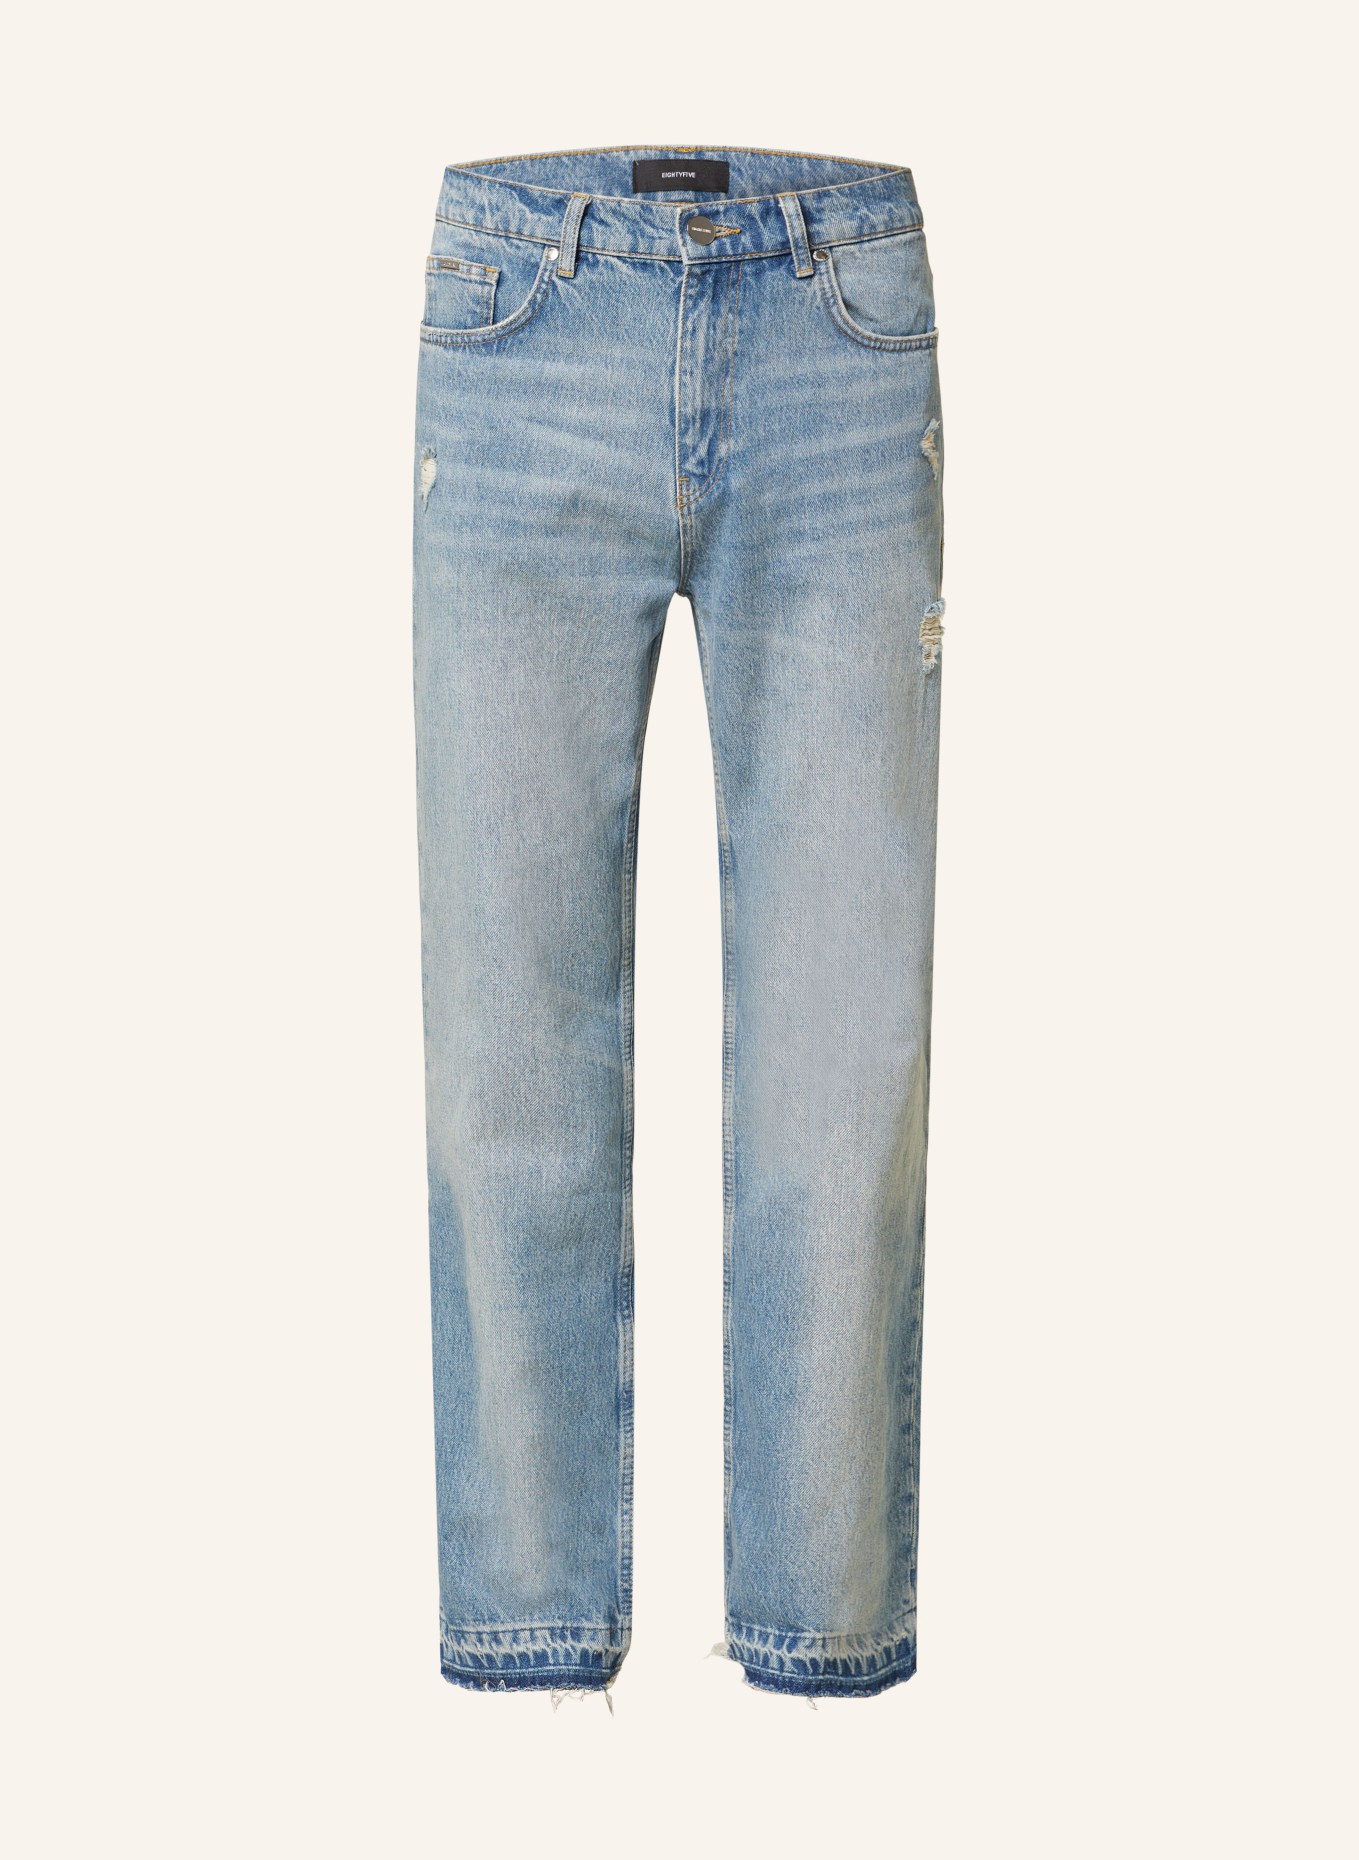 EIGHTYFIVE Jeans Straight Fit, Farbe: Light Wash Blue (Bild 1)